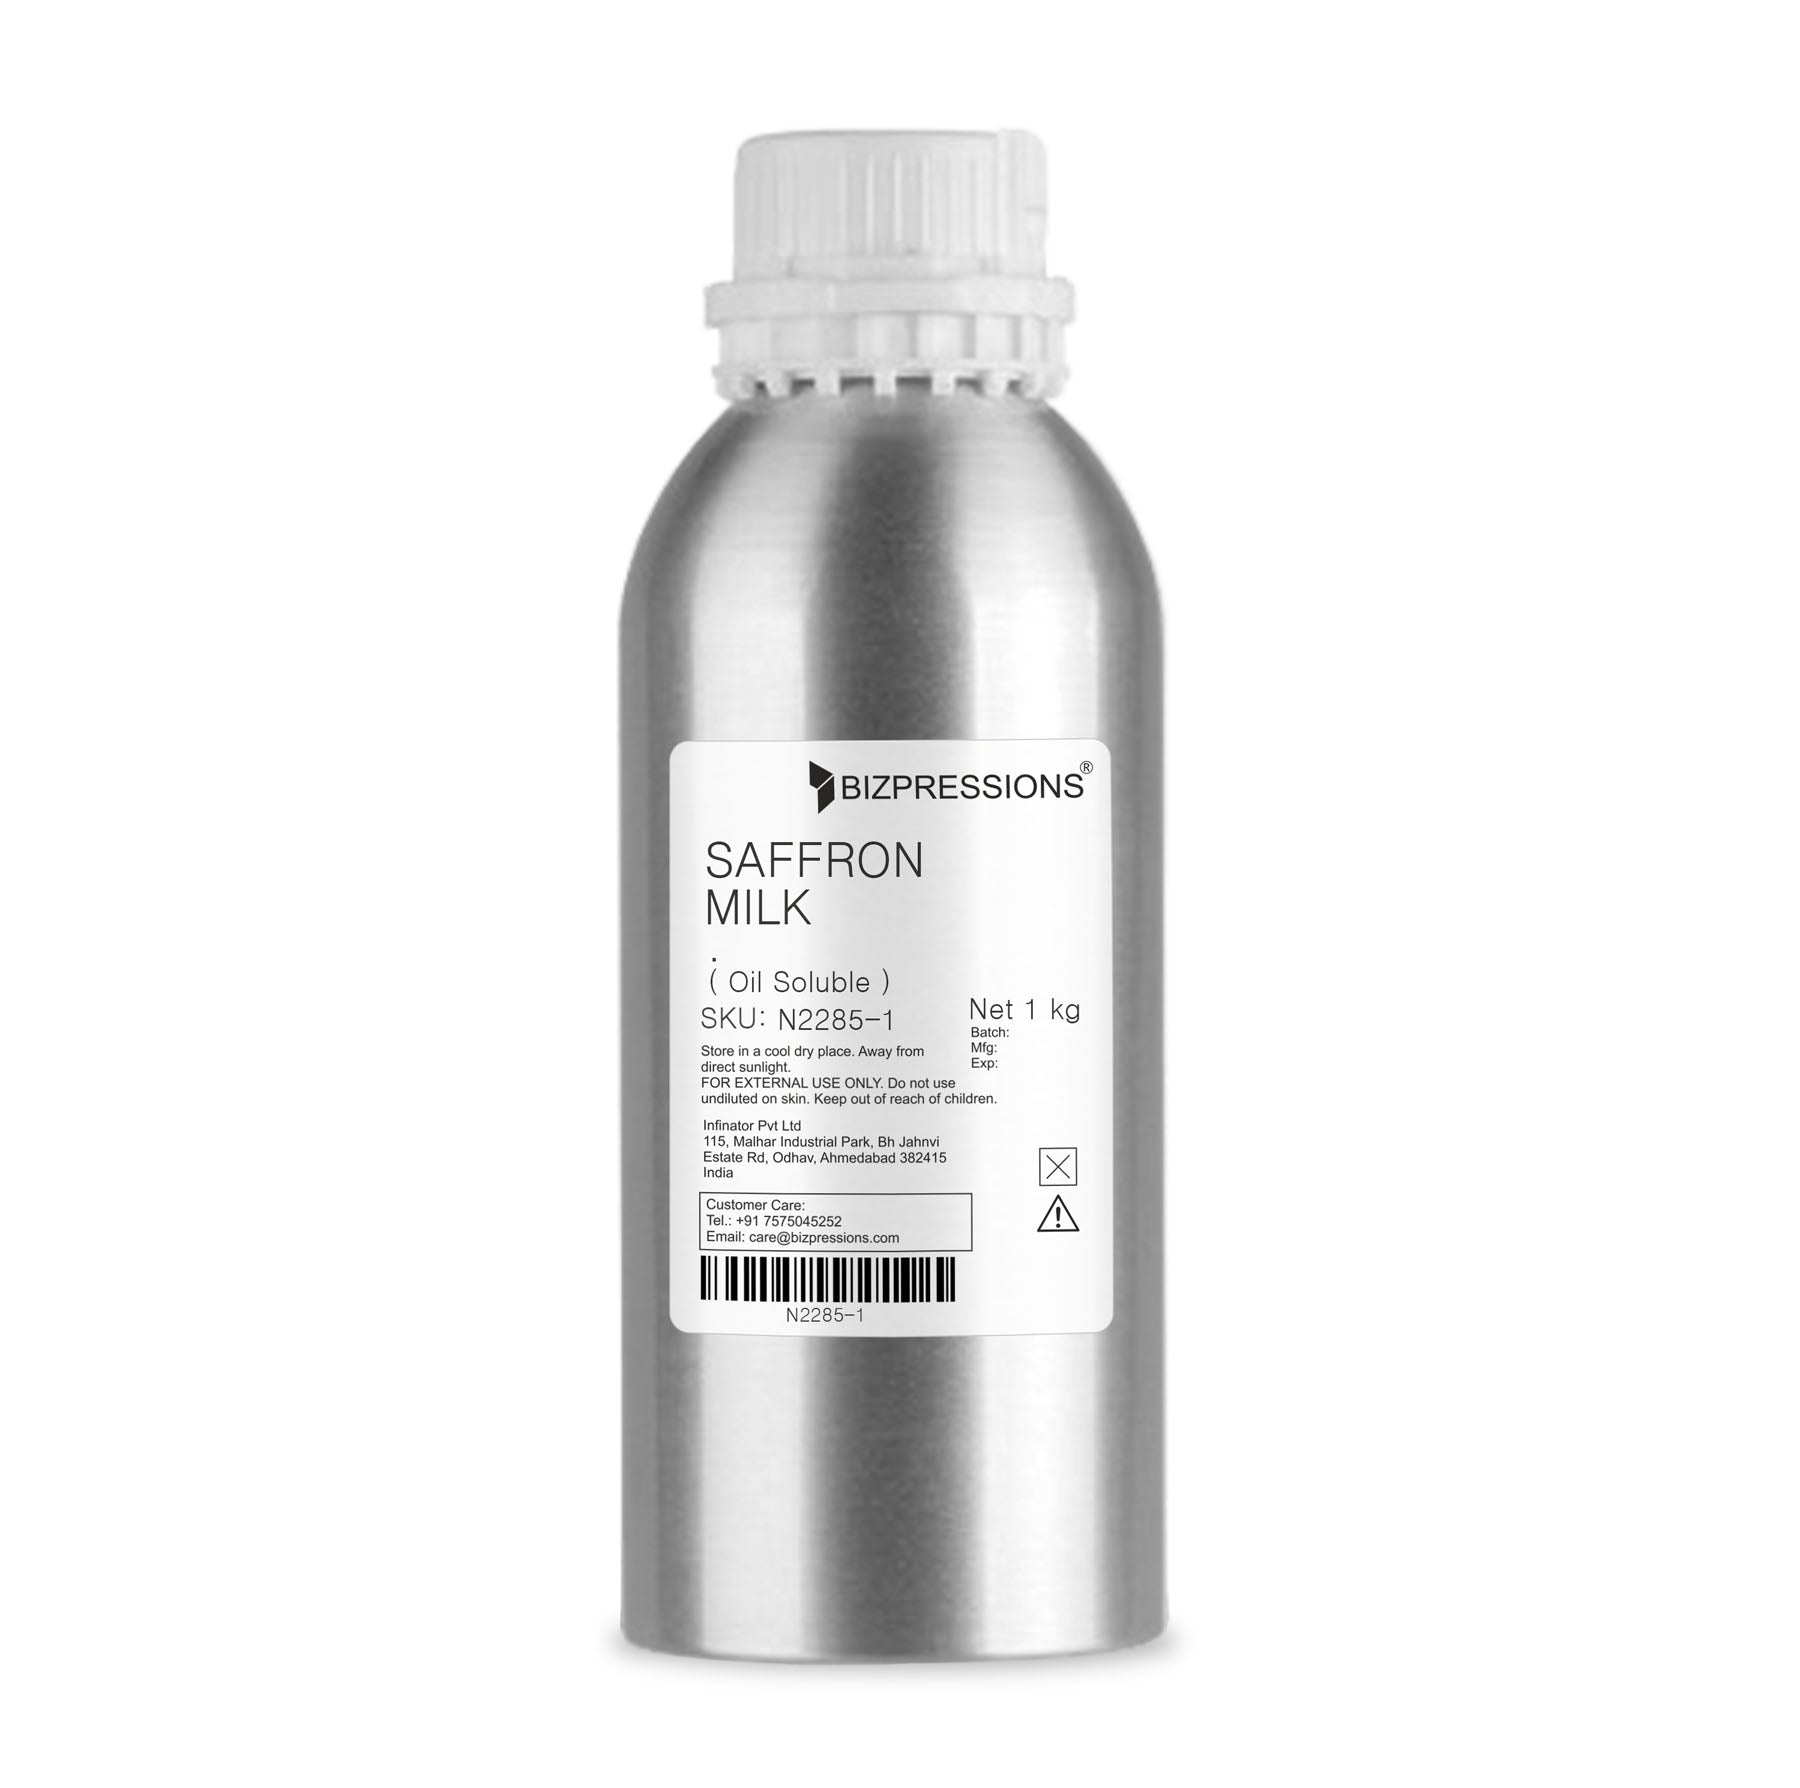 SAFFRON MILK - Fragrance ( Oil Soluble ) - 1 kg